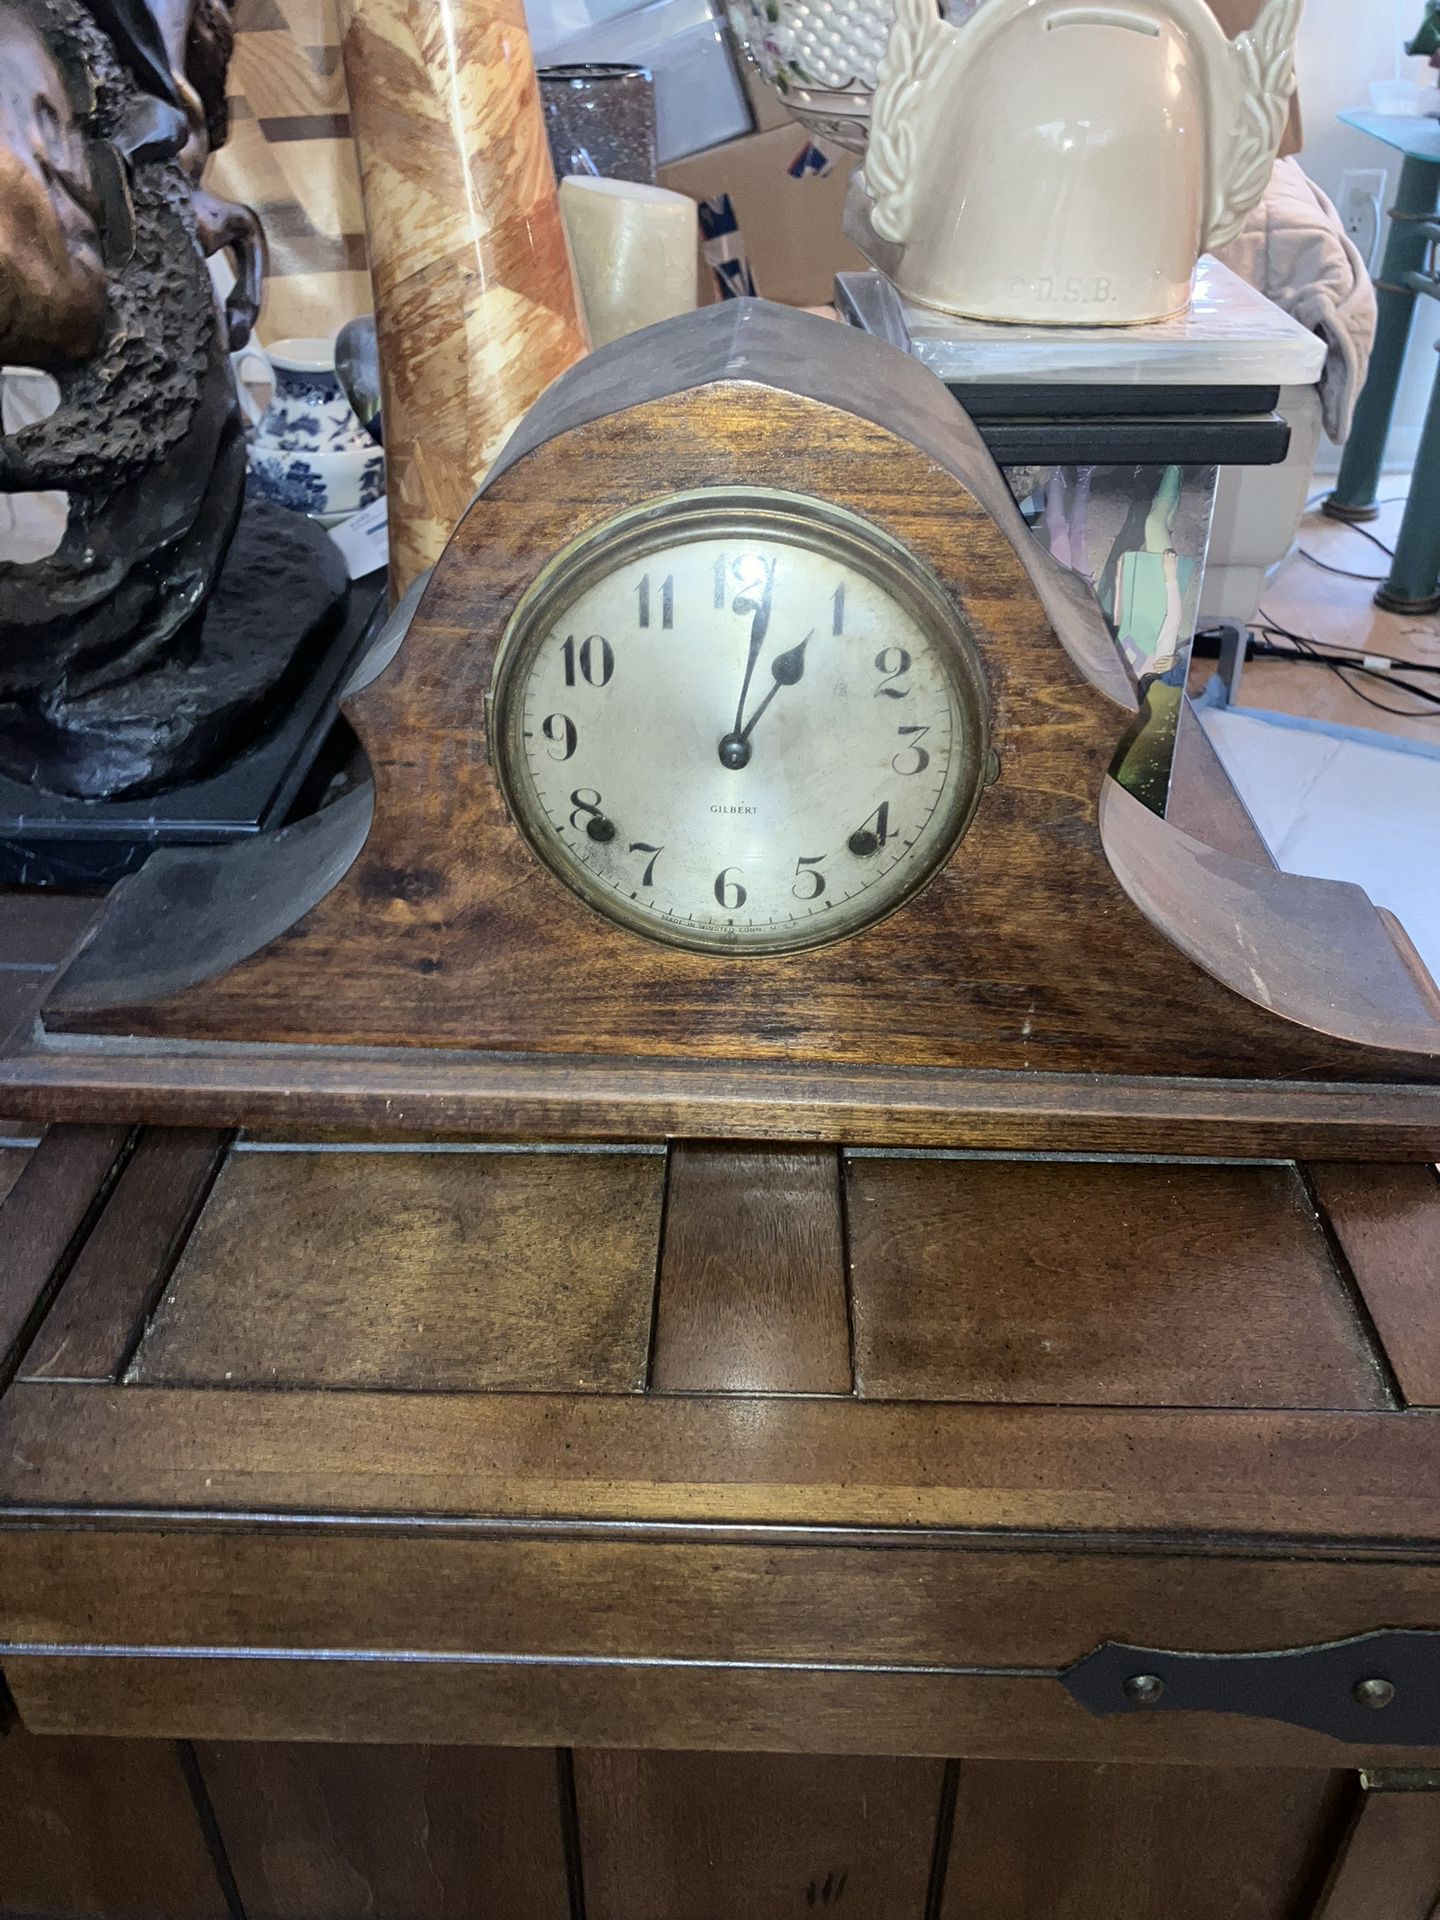 Antique Gilbert Mantel Mantle Clock Winstead Connecticut